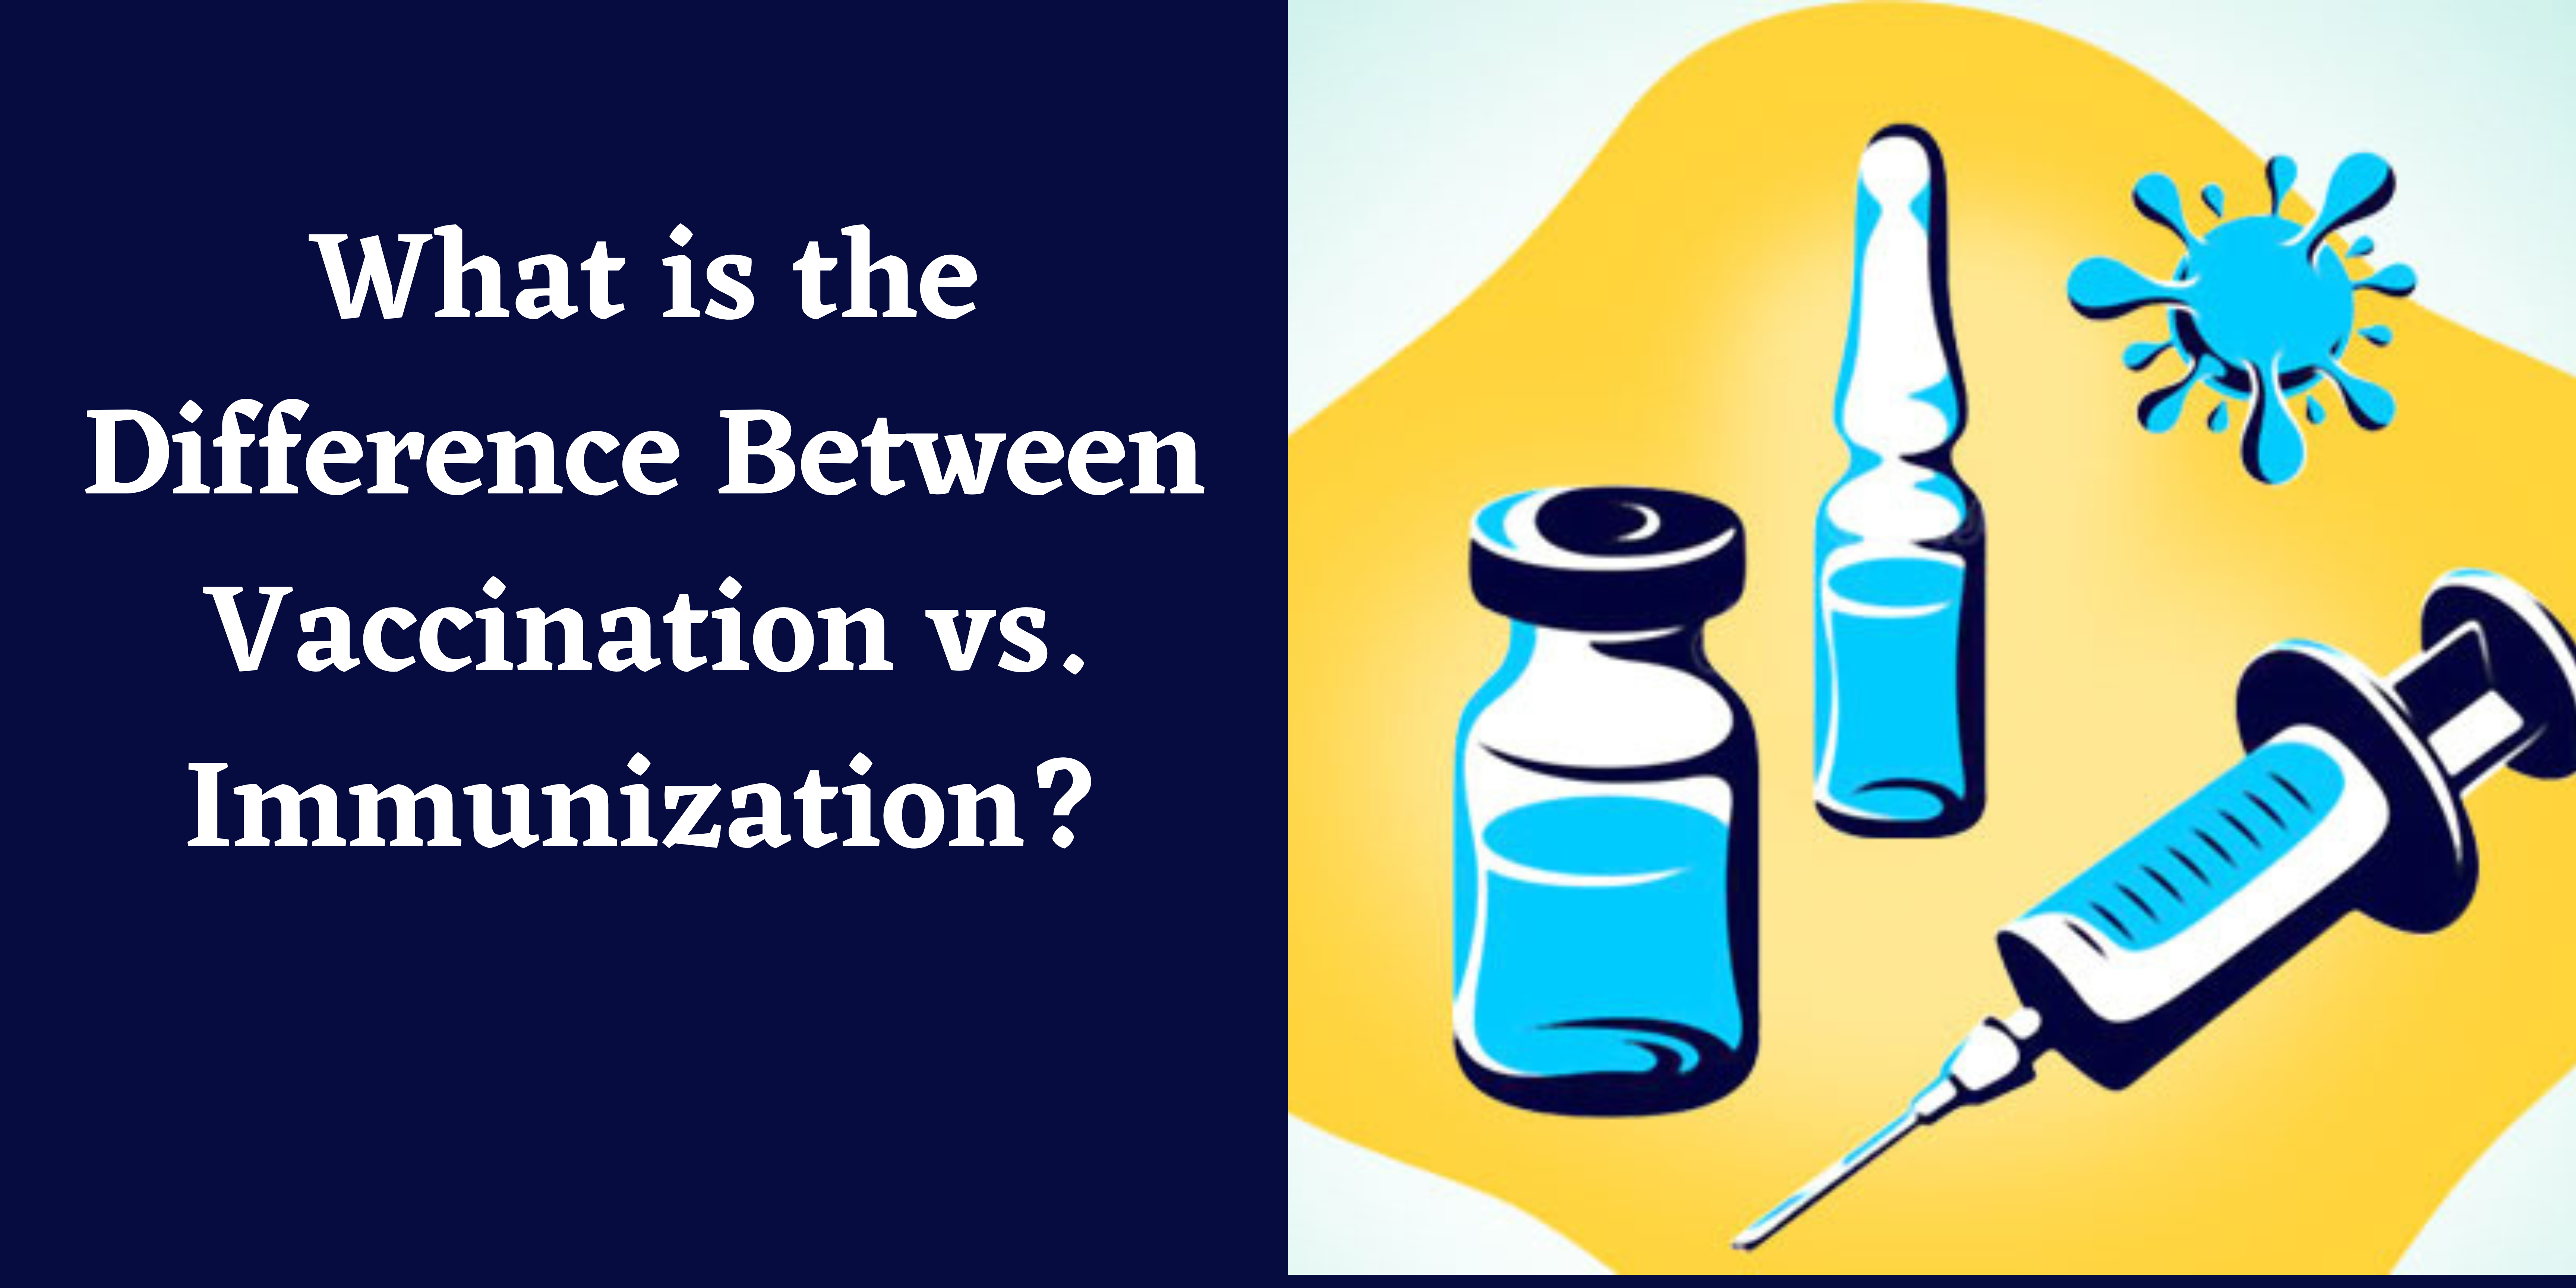 Vaccination vs immunization